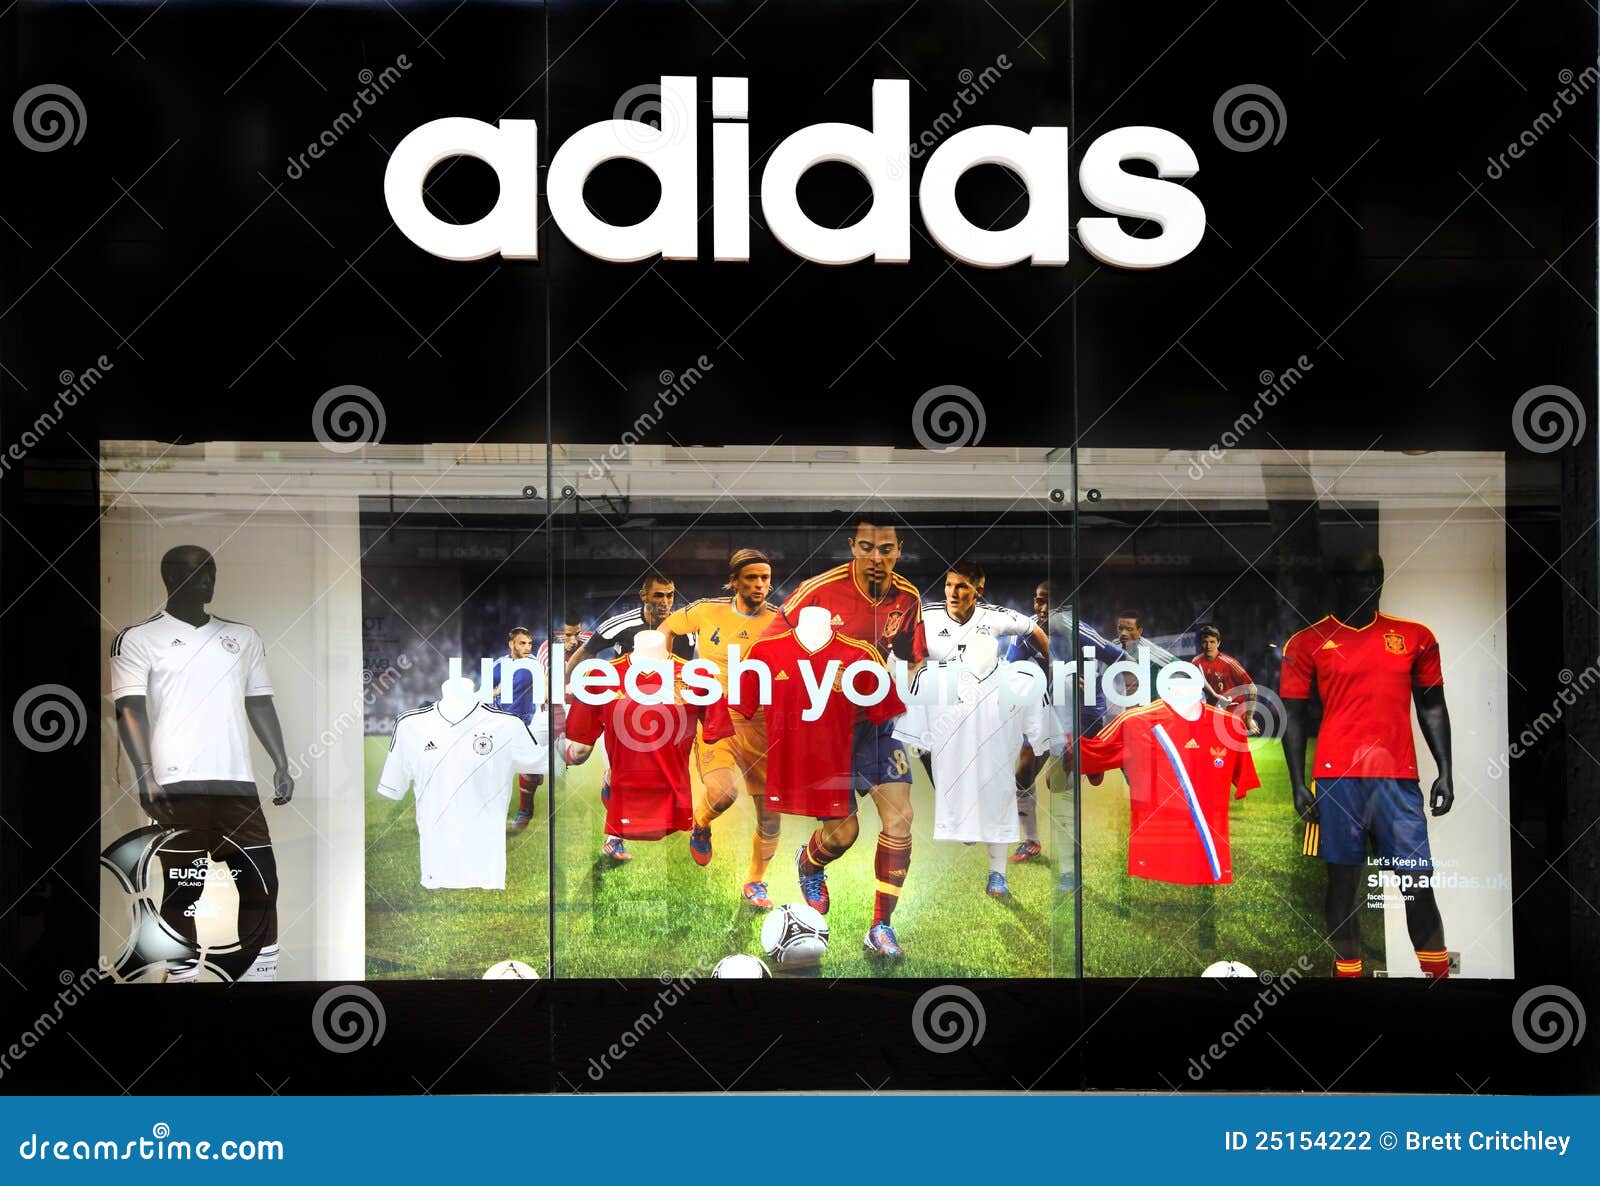 adidas outlets uk